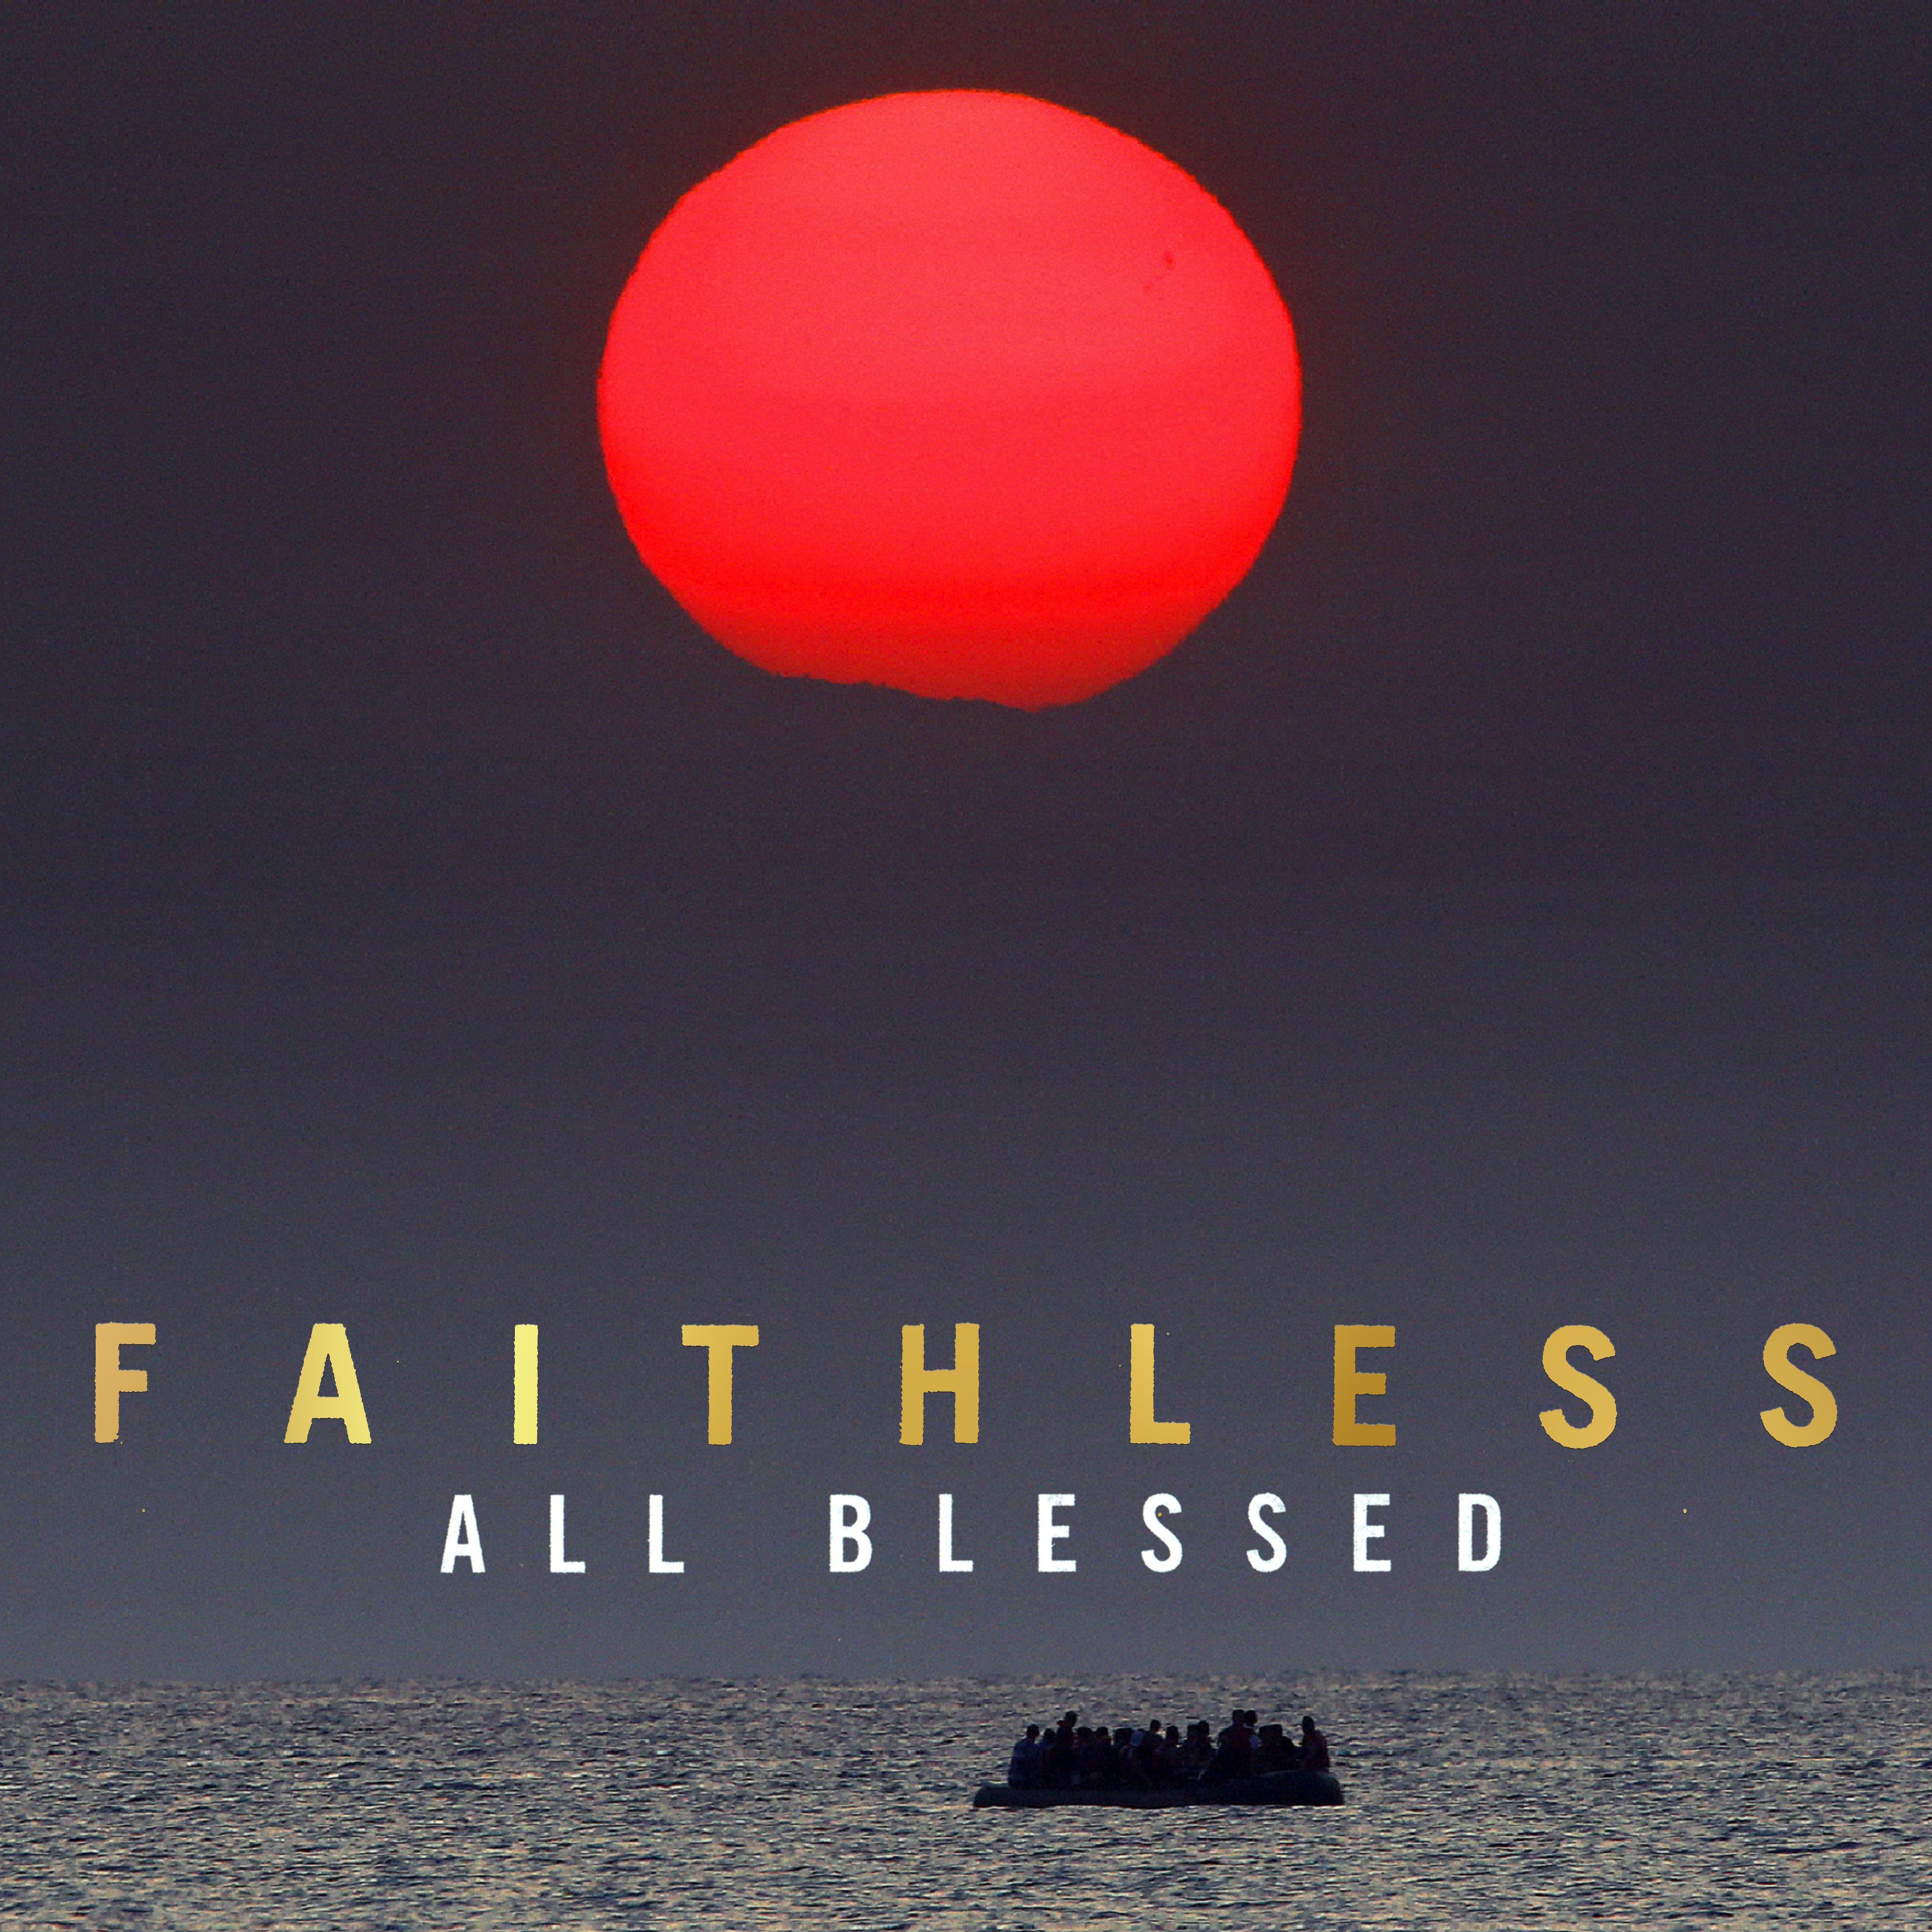 Faithless - Take Your Time (feat. Damien Jurado & Suli Breaks)